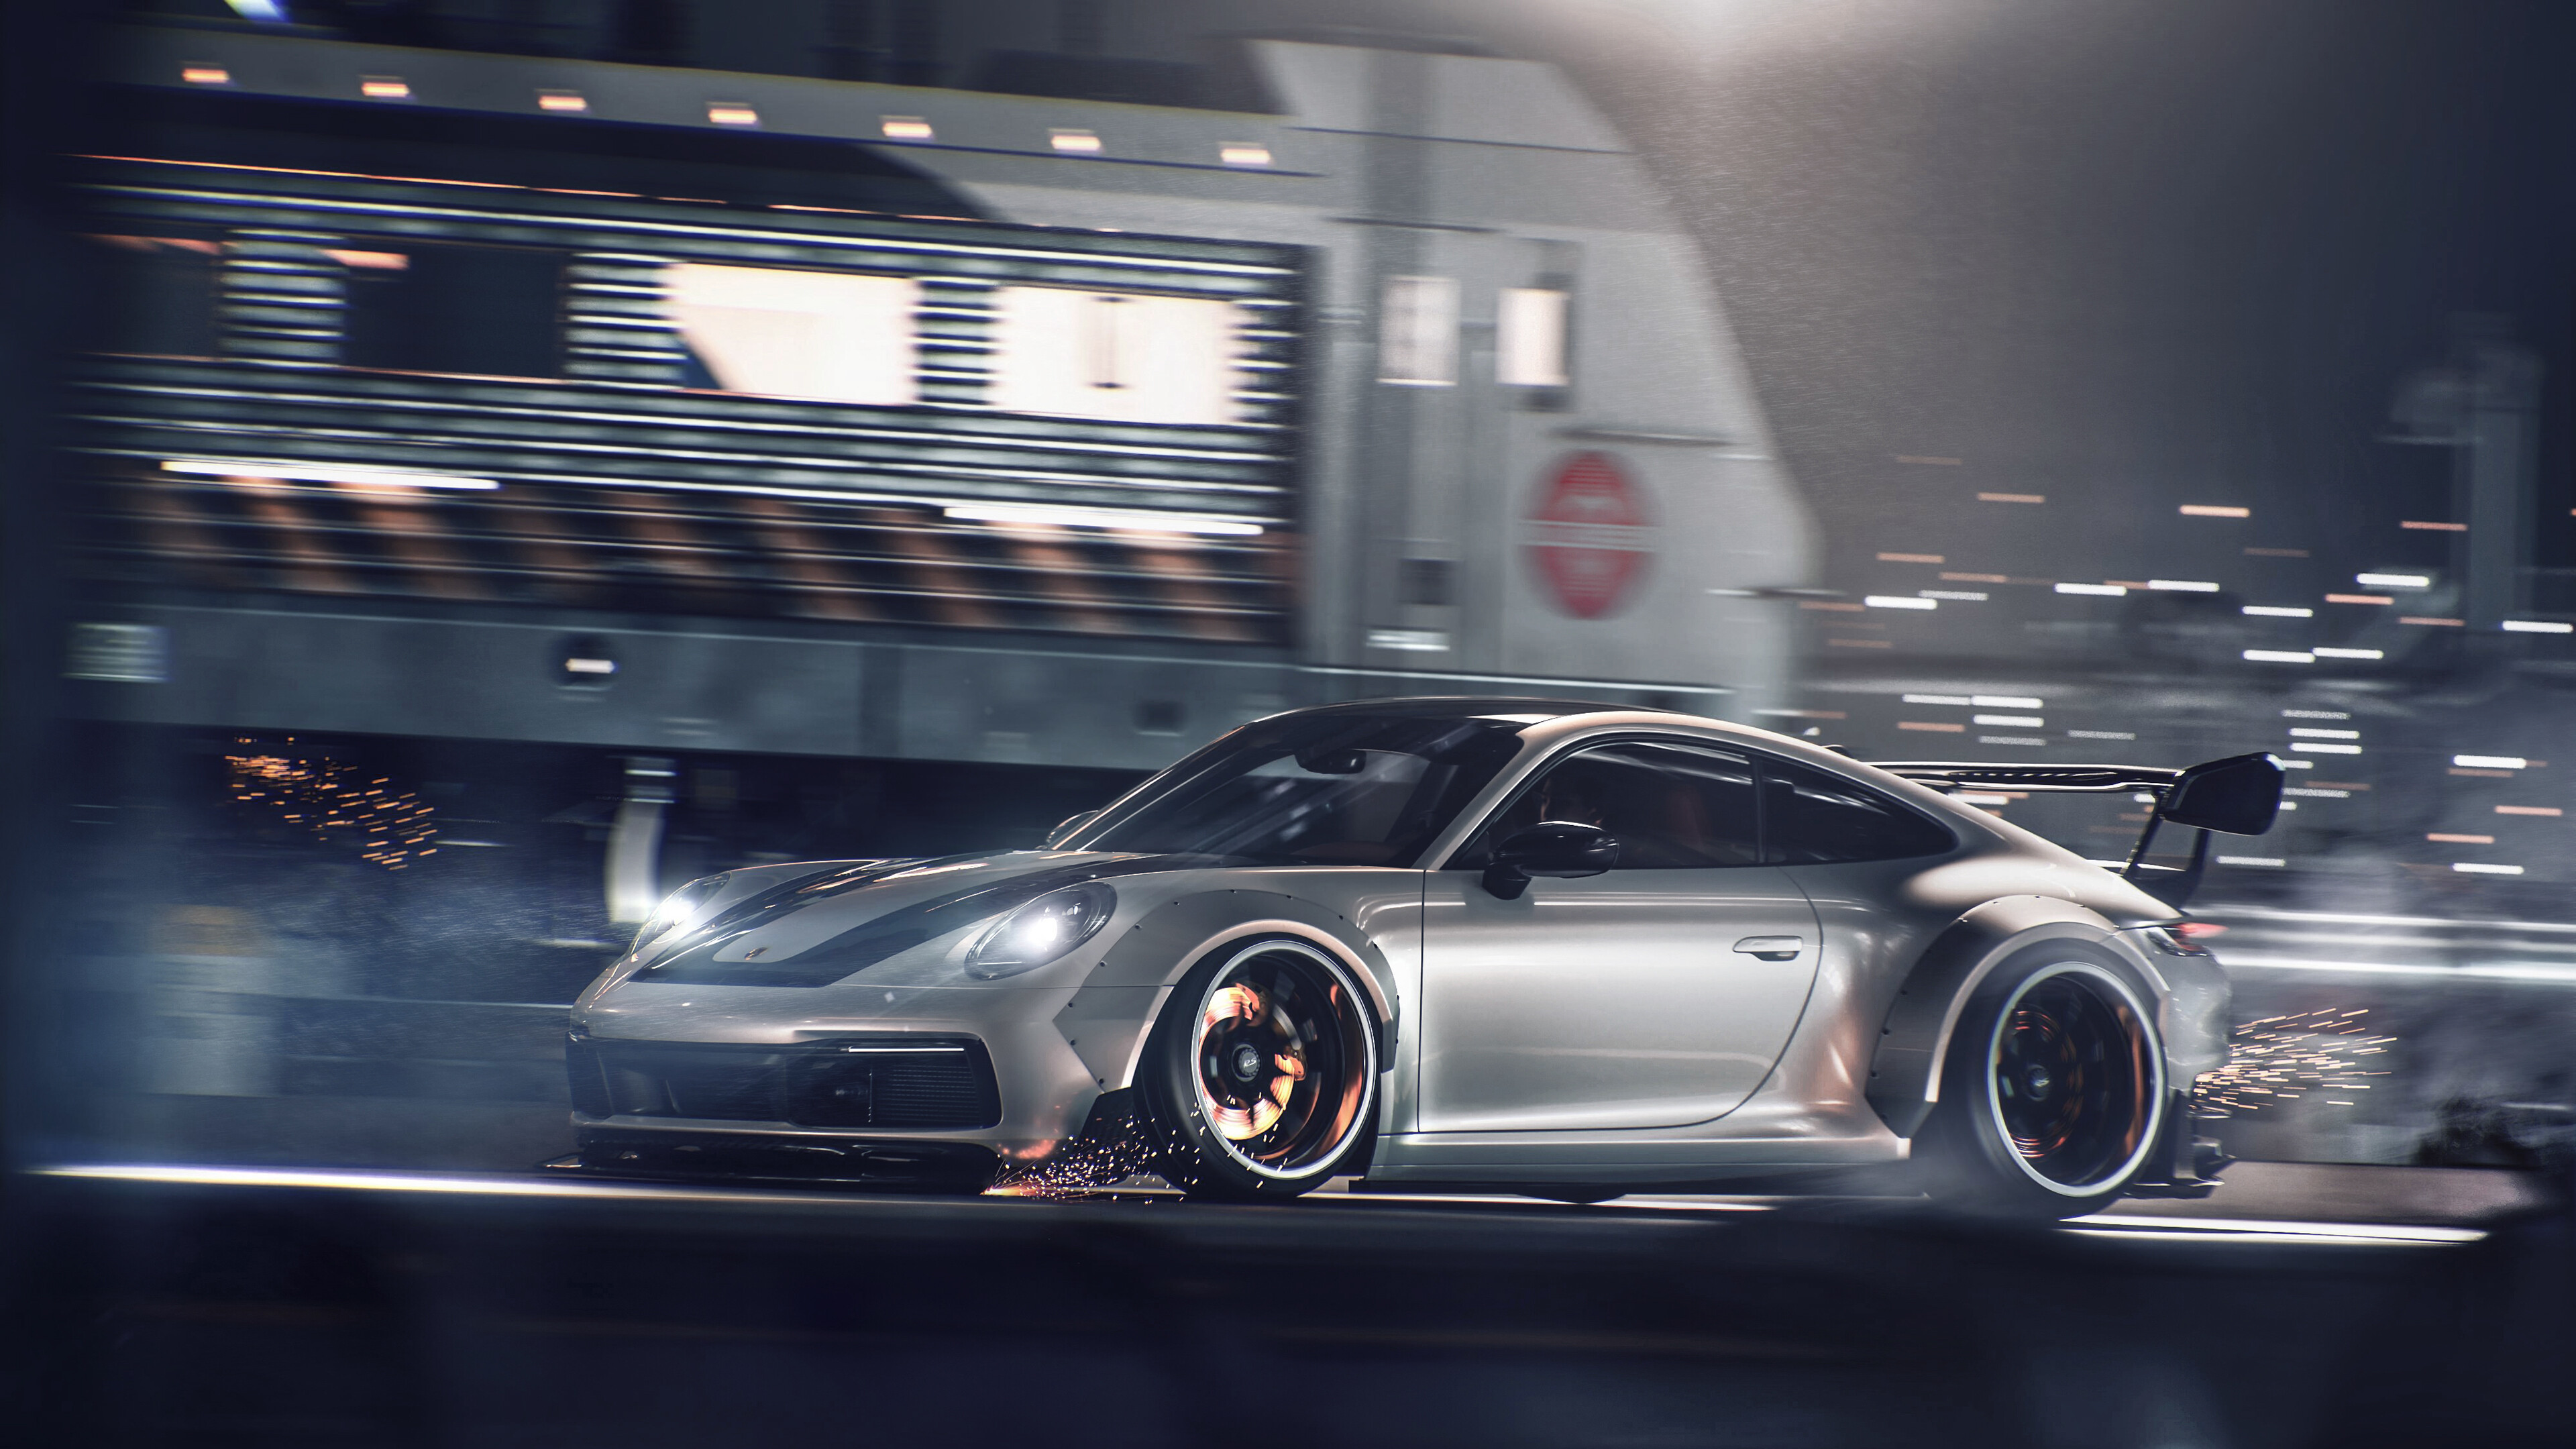 Porsche: GT3 911, The 6-speed GT sports manual transmission. 3840x2160 4K Wallpaper.